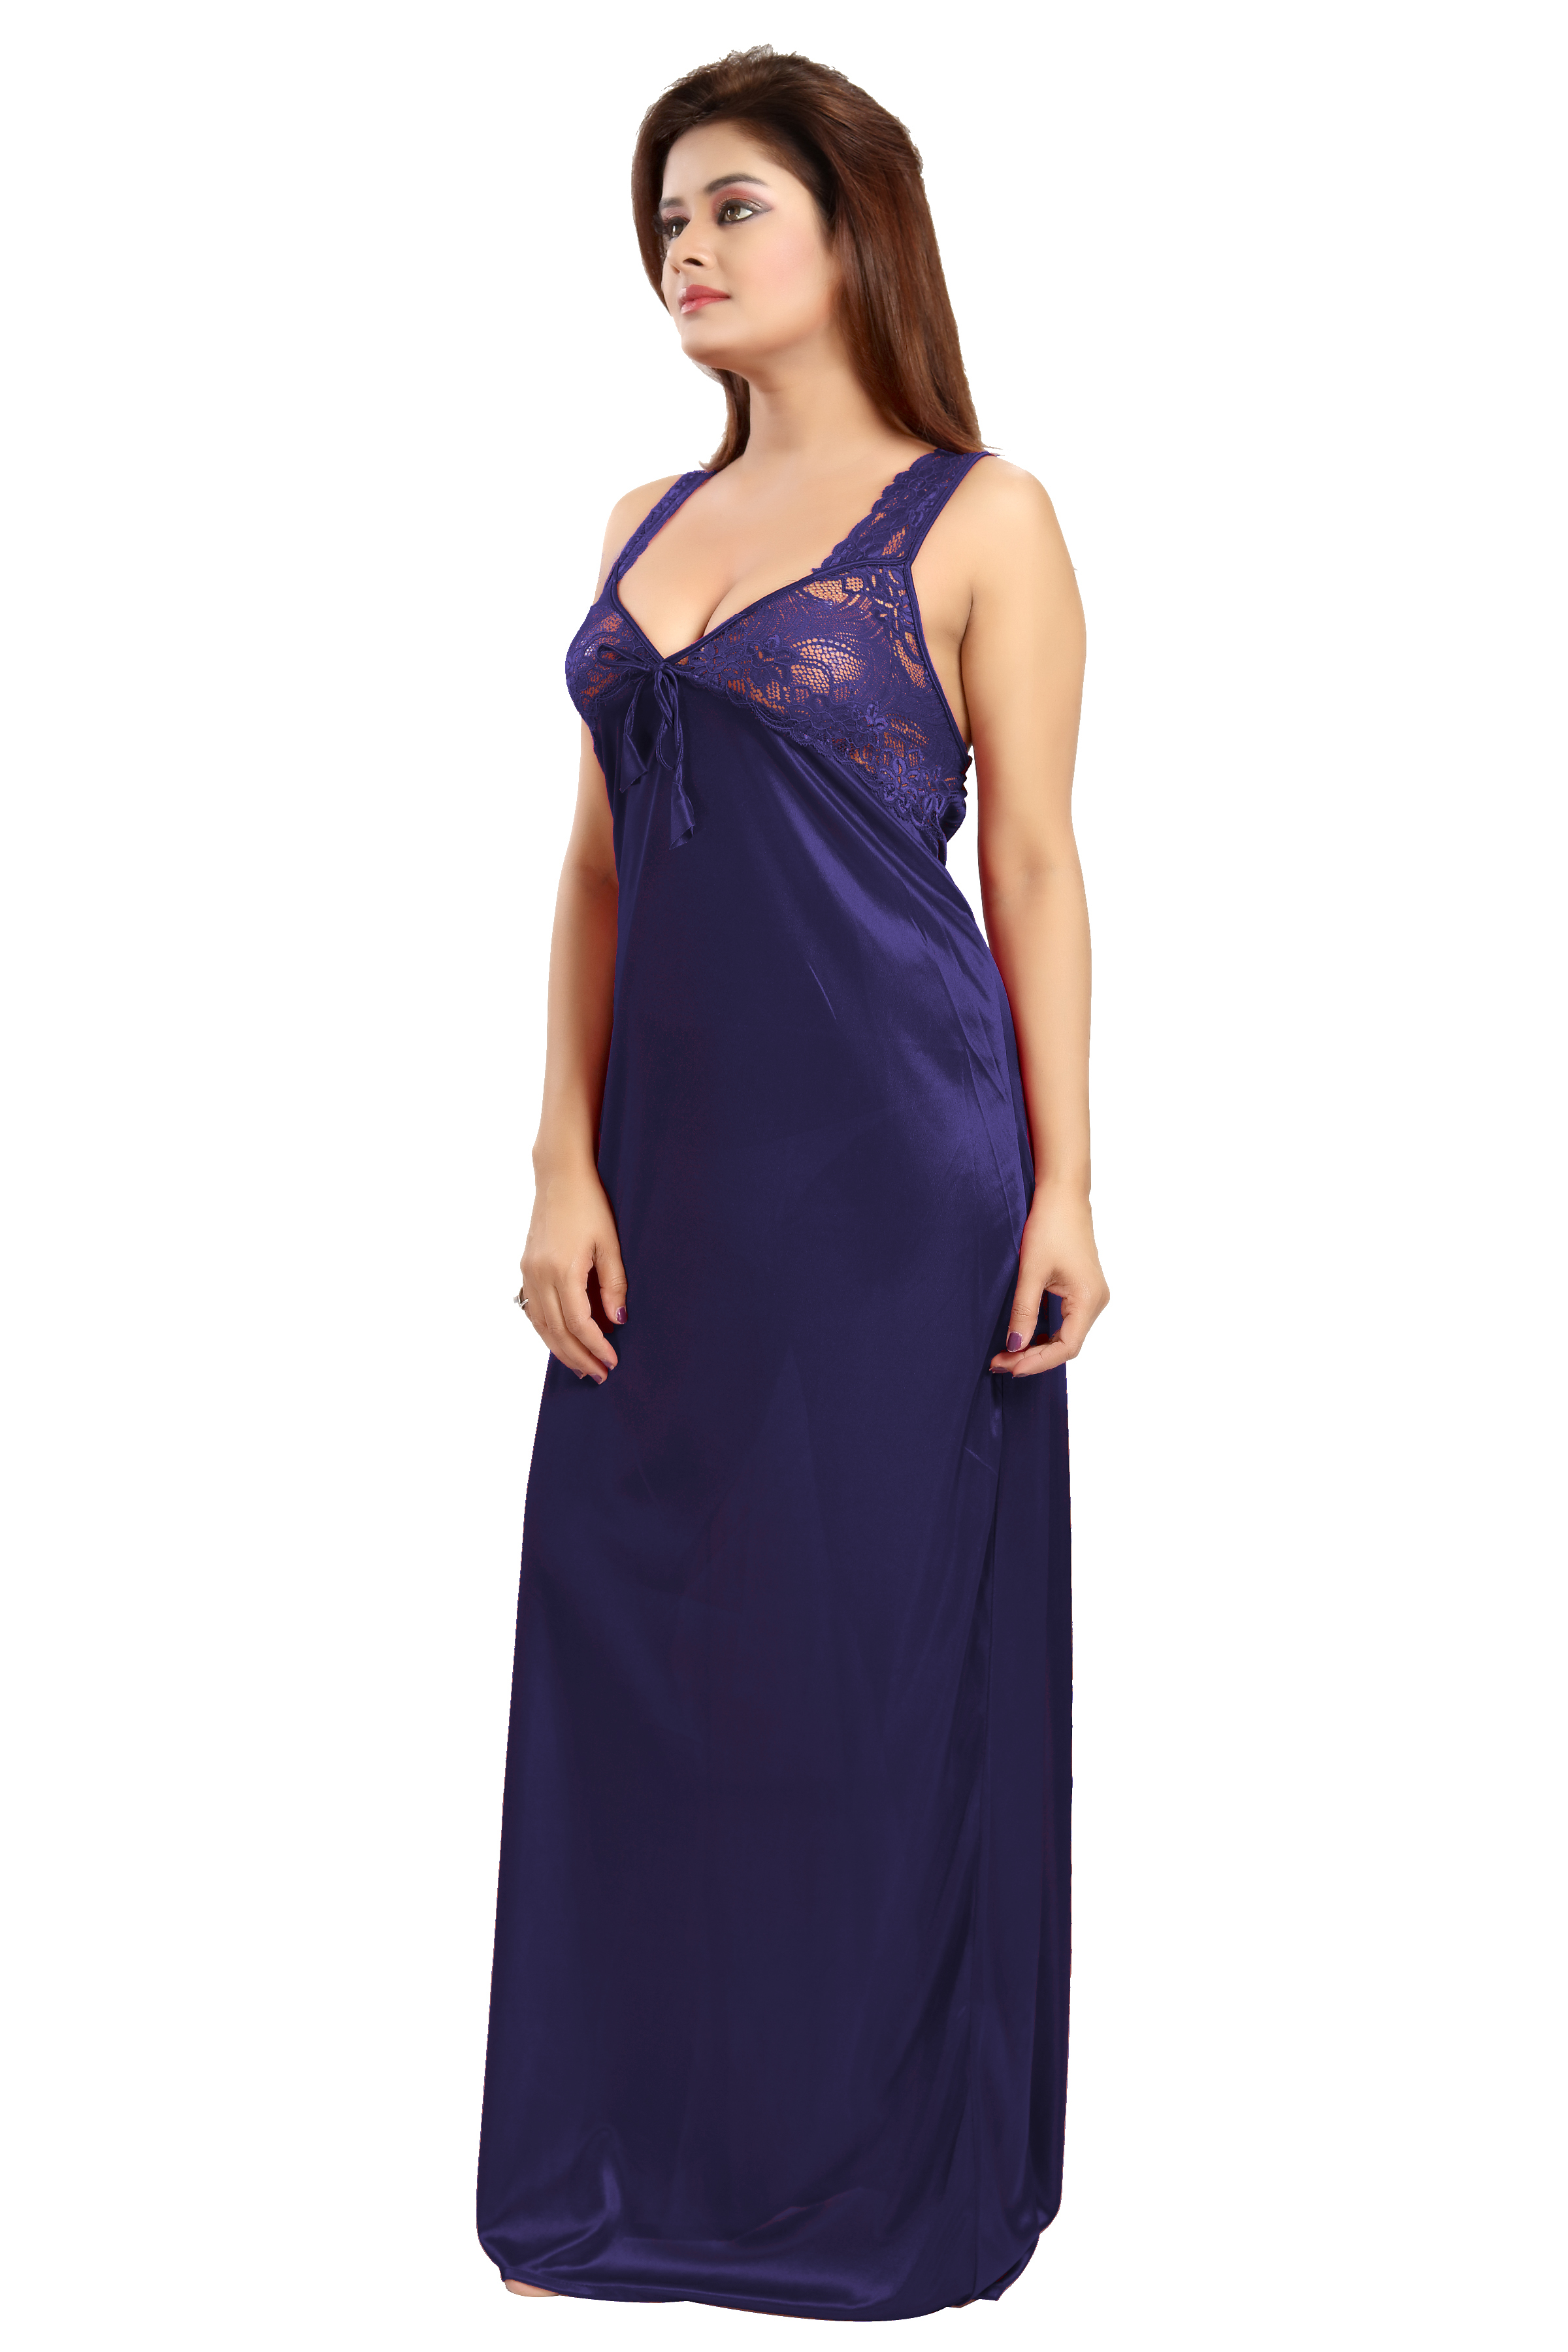 Buy Be You Navy Blue Solid Women Nighty / Night Dress Online @ ₹459 ...